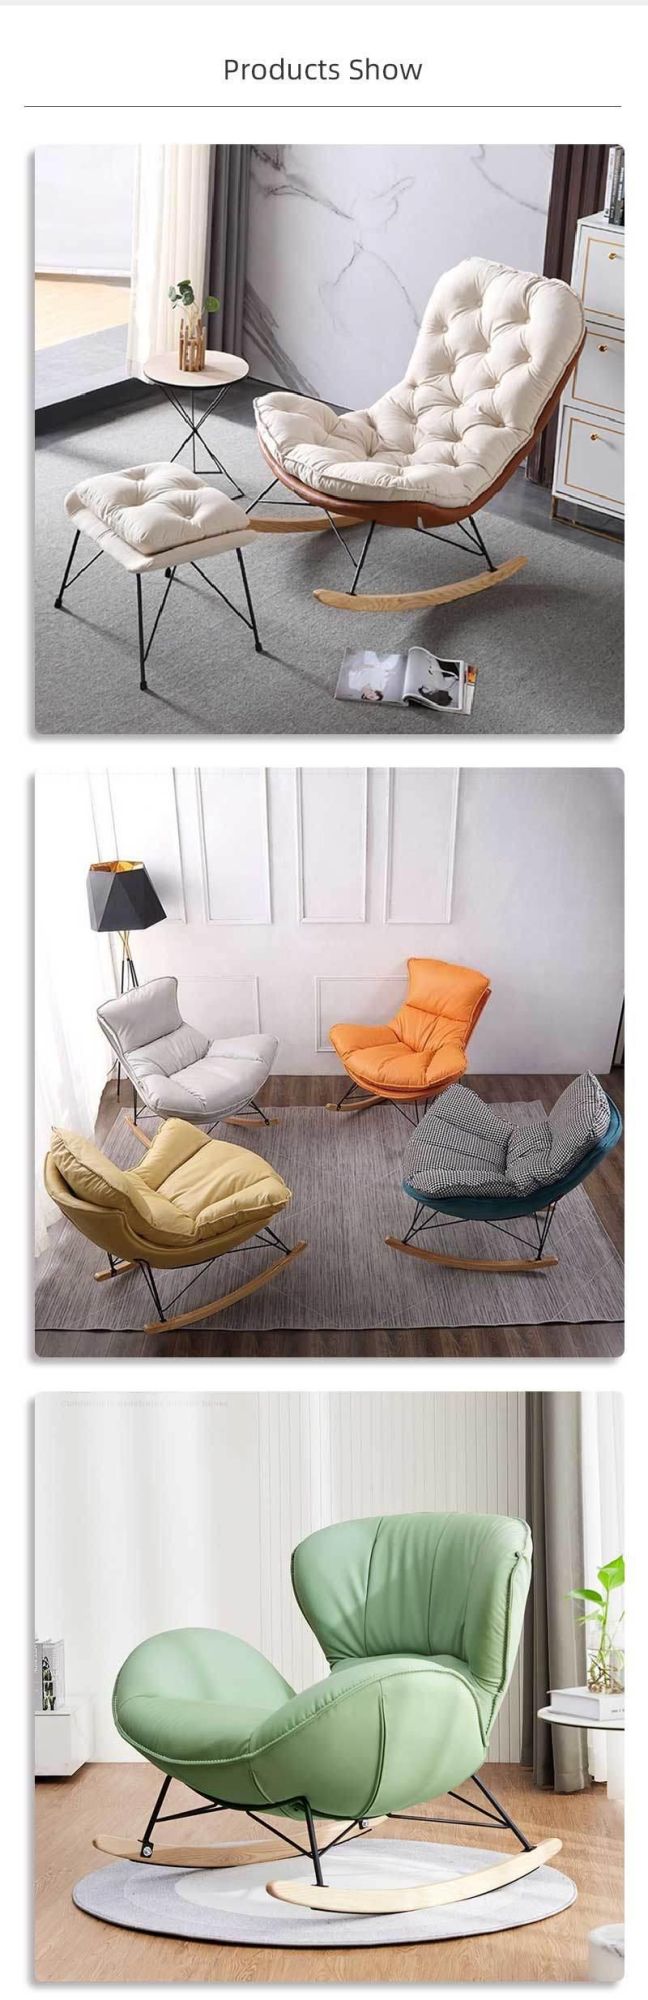 Modern Luxury Simple Fashion Leopard Leisure Reliable Single Sofa